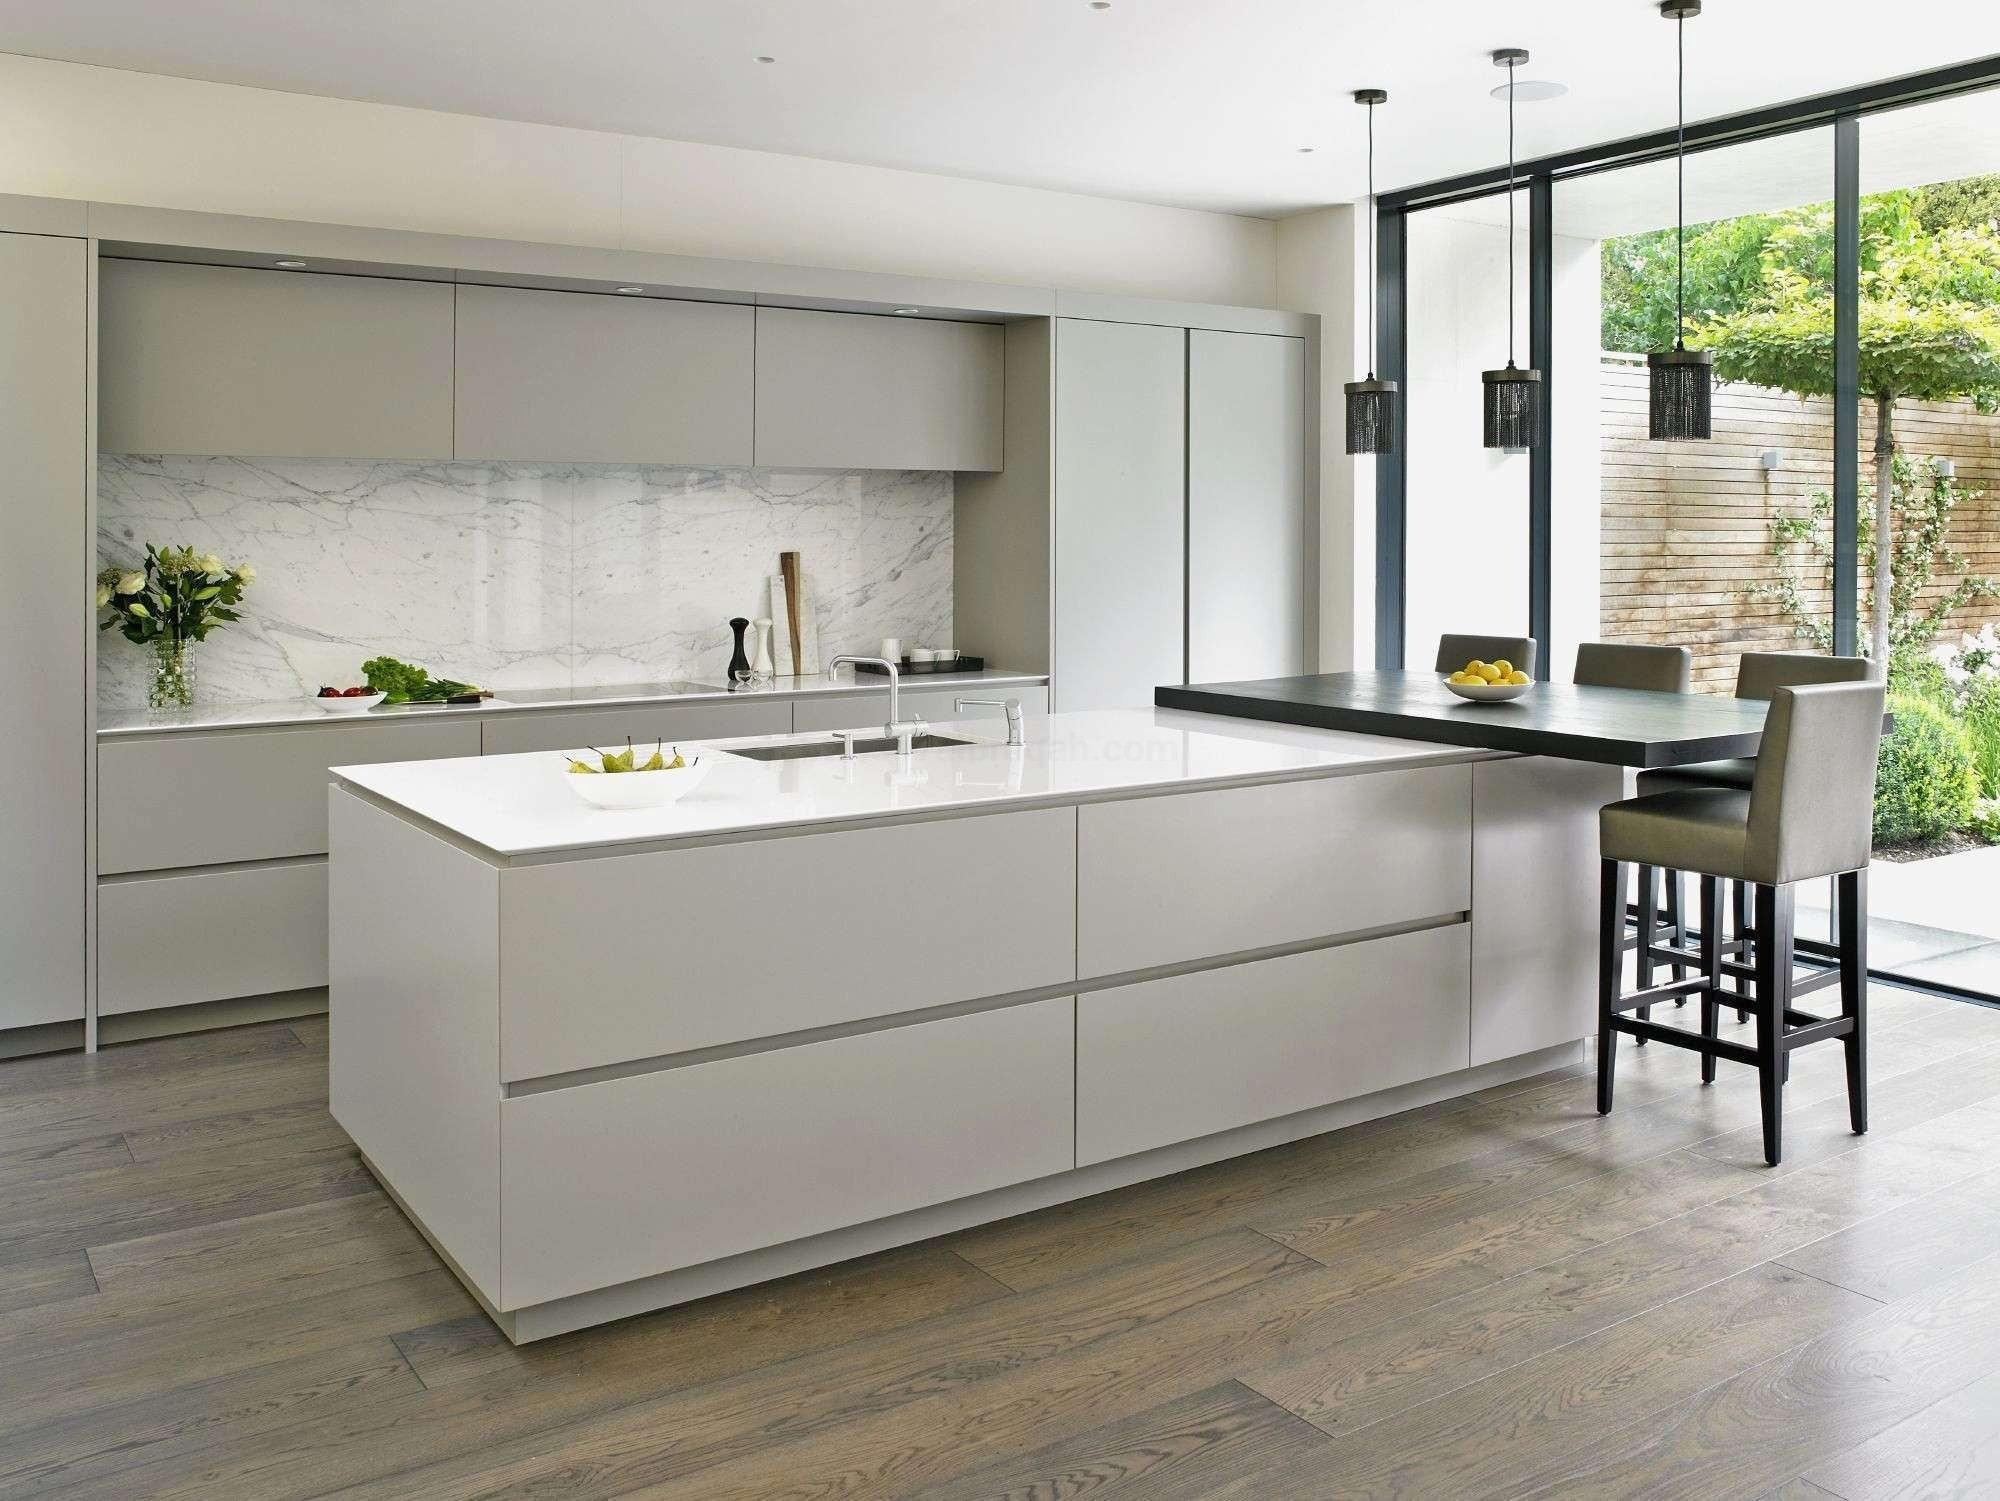 Herringbone Backsplash Best Of 25 Awesome Best Hardwood Floor Color with White Cabinets